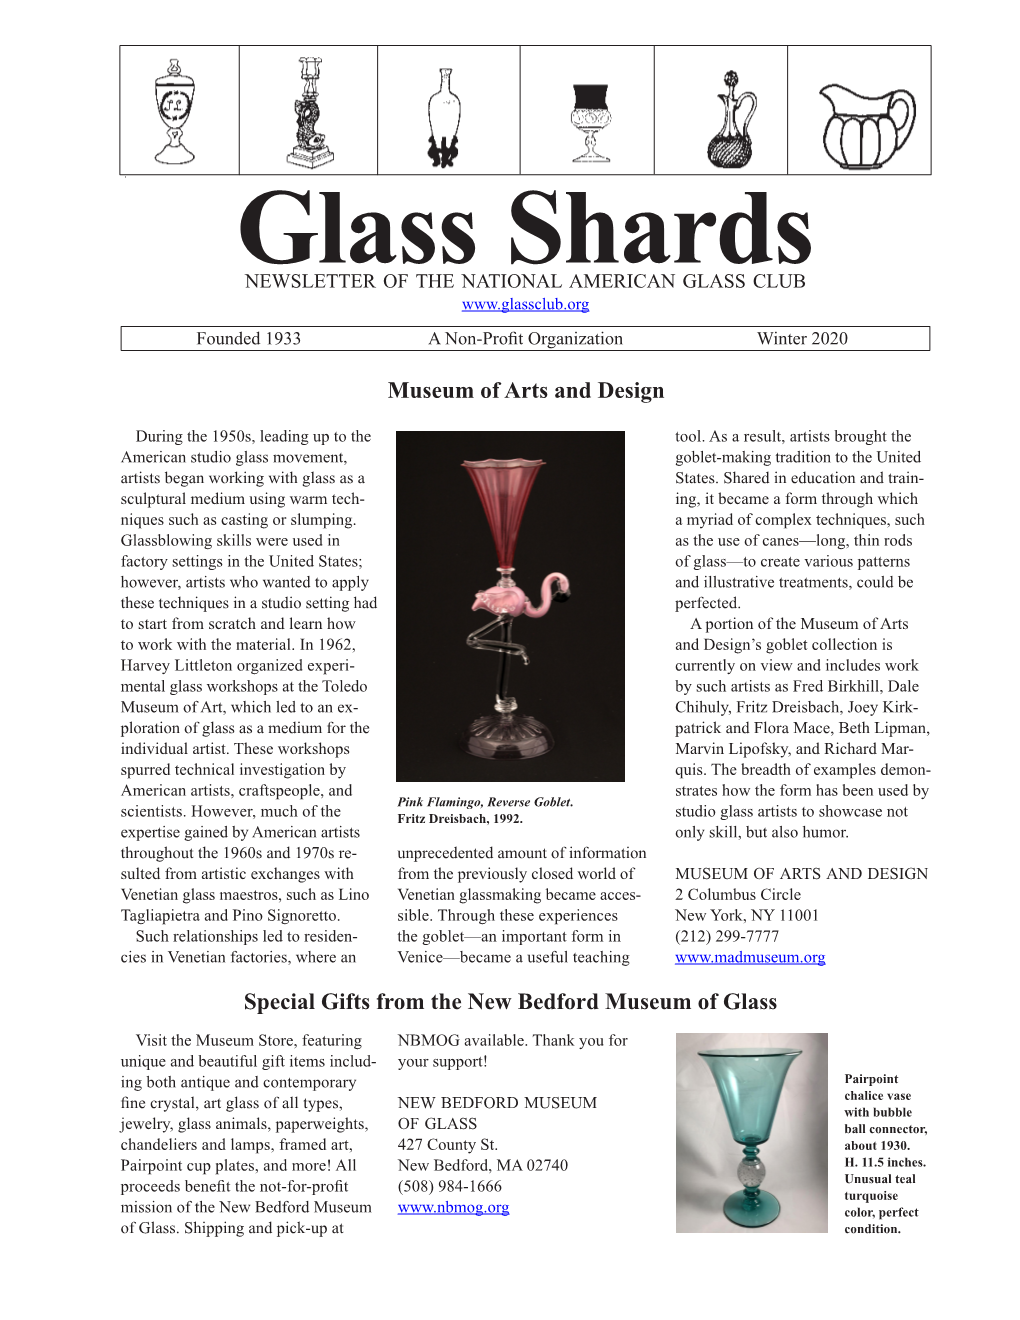 Glass Shards Winter 2020